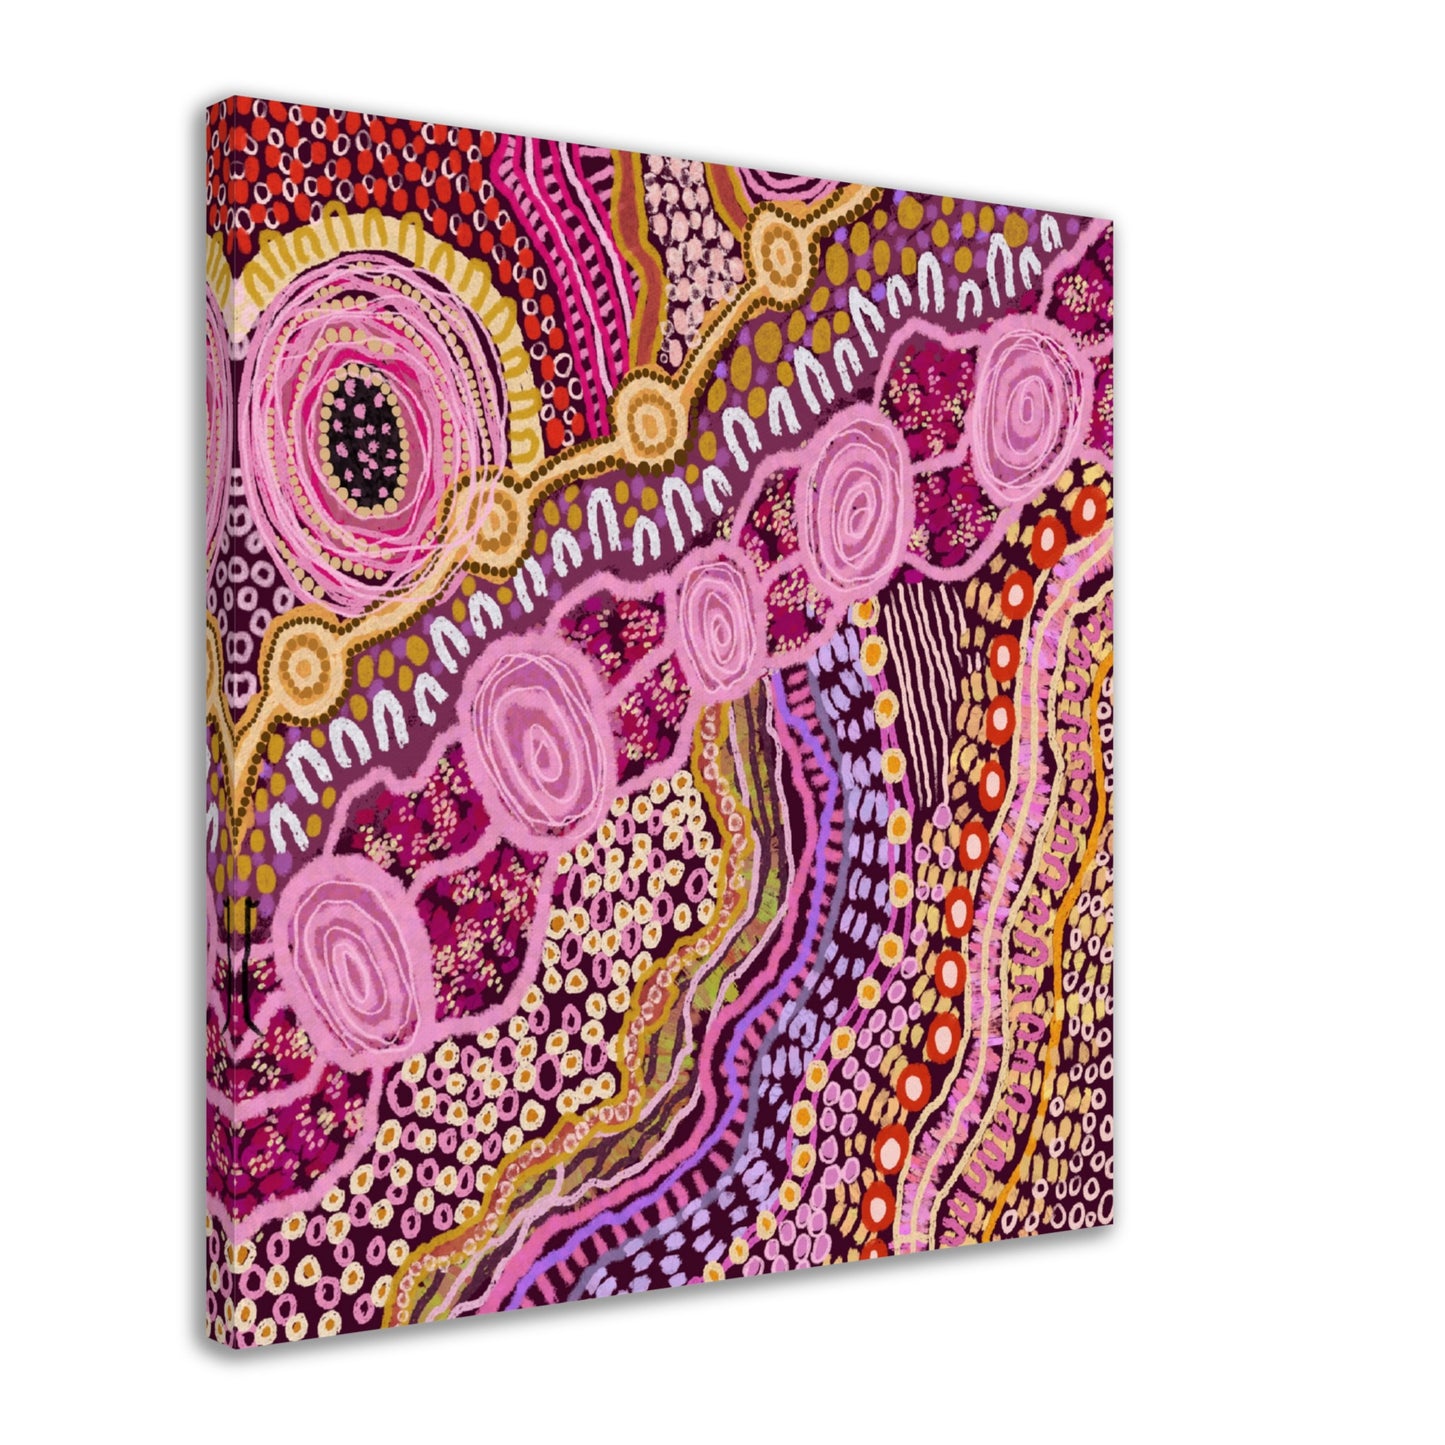 Aboriginal Art | Baba [Wiradjuri for Mother] |Print to Canvas